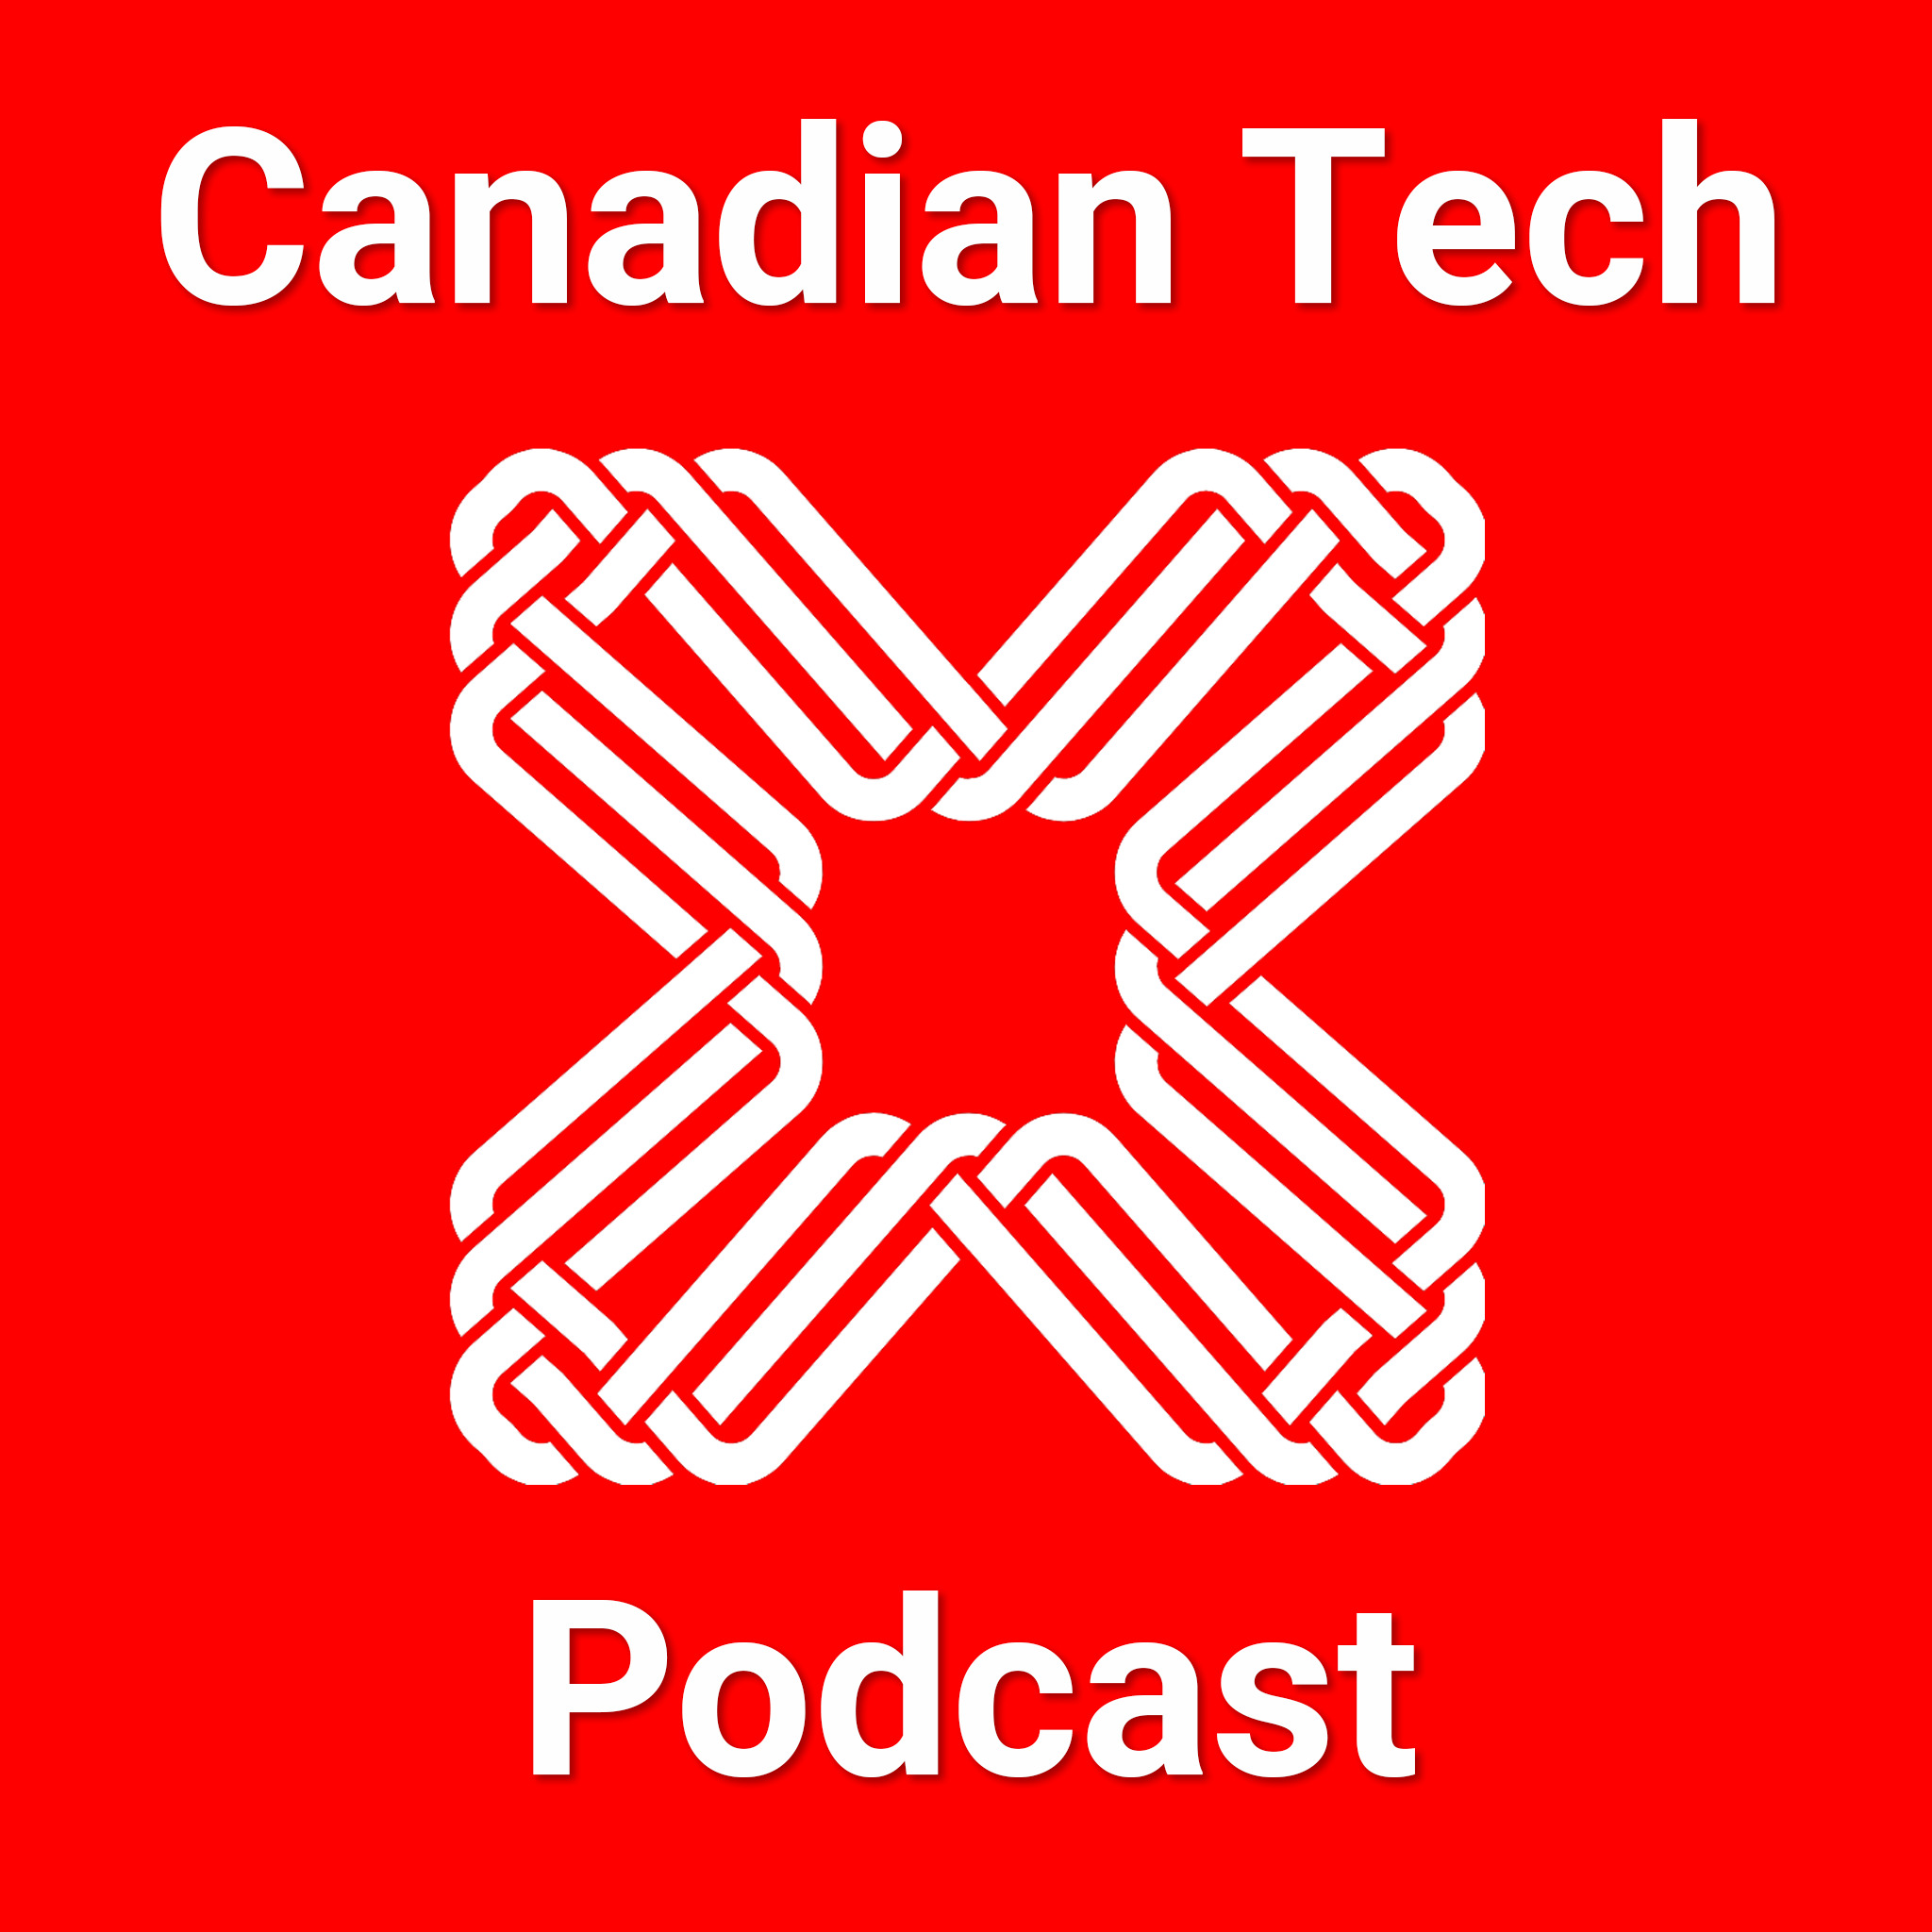 Canadian Tech Podcast Listen via Stitcher for Podcasts